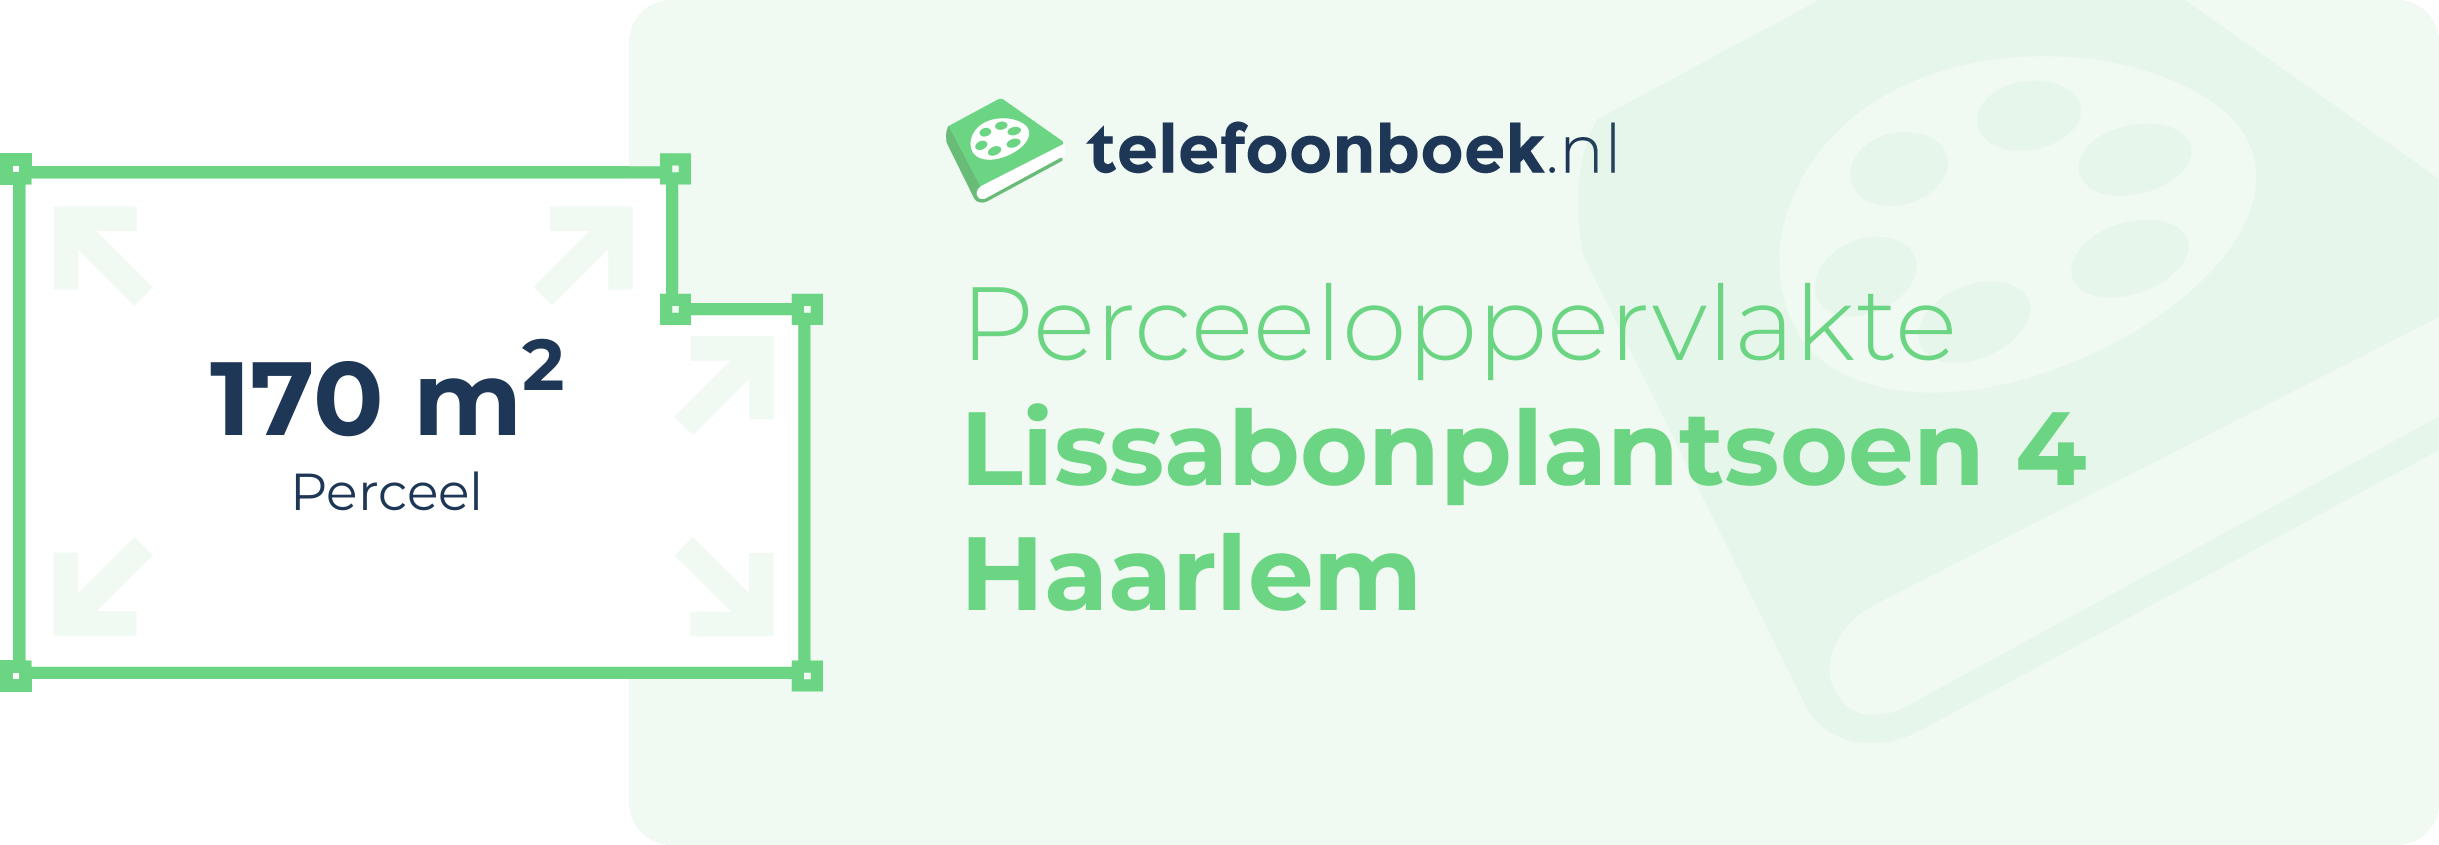 Perceeloppervlakte Lissabonplantsoen 4 Haarlem